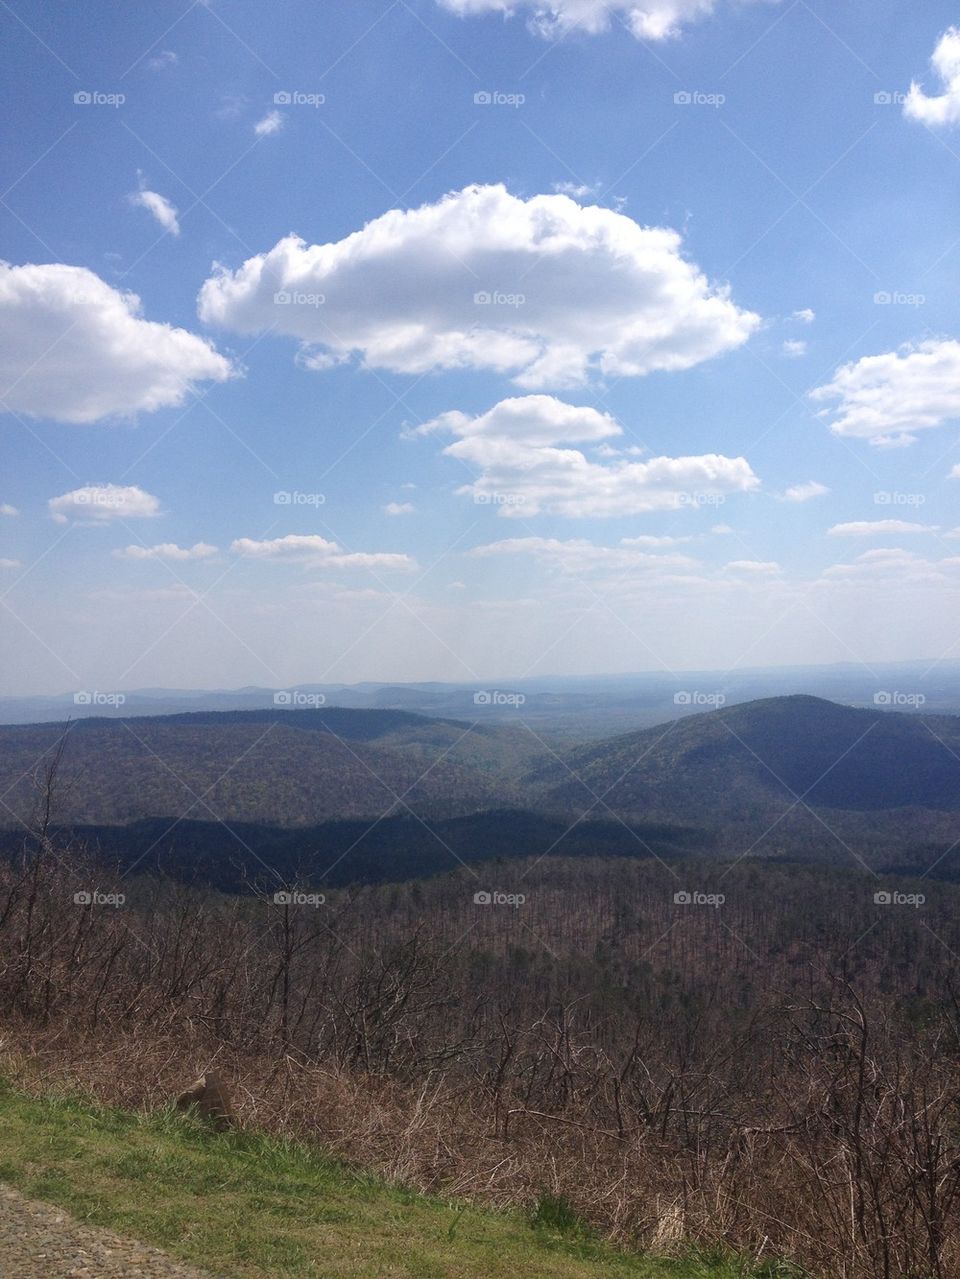 Arkansas hills